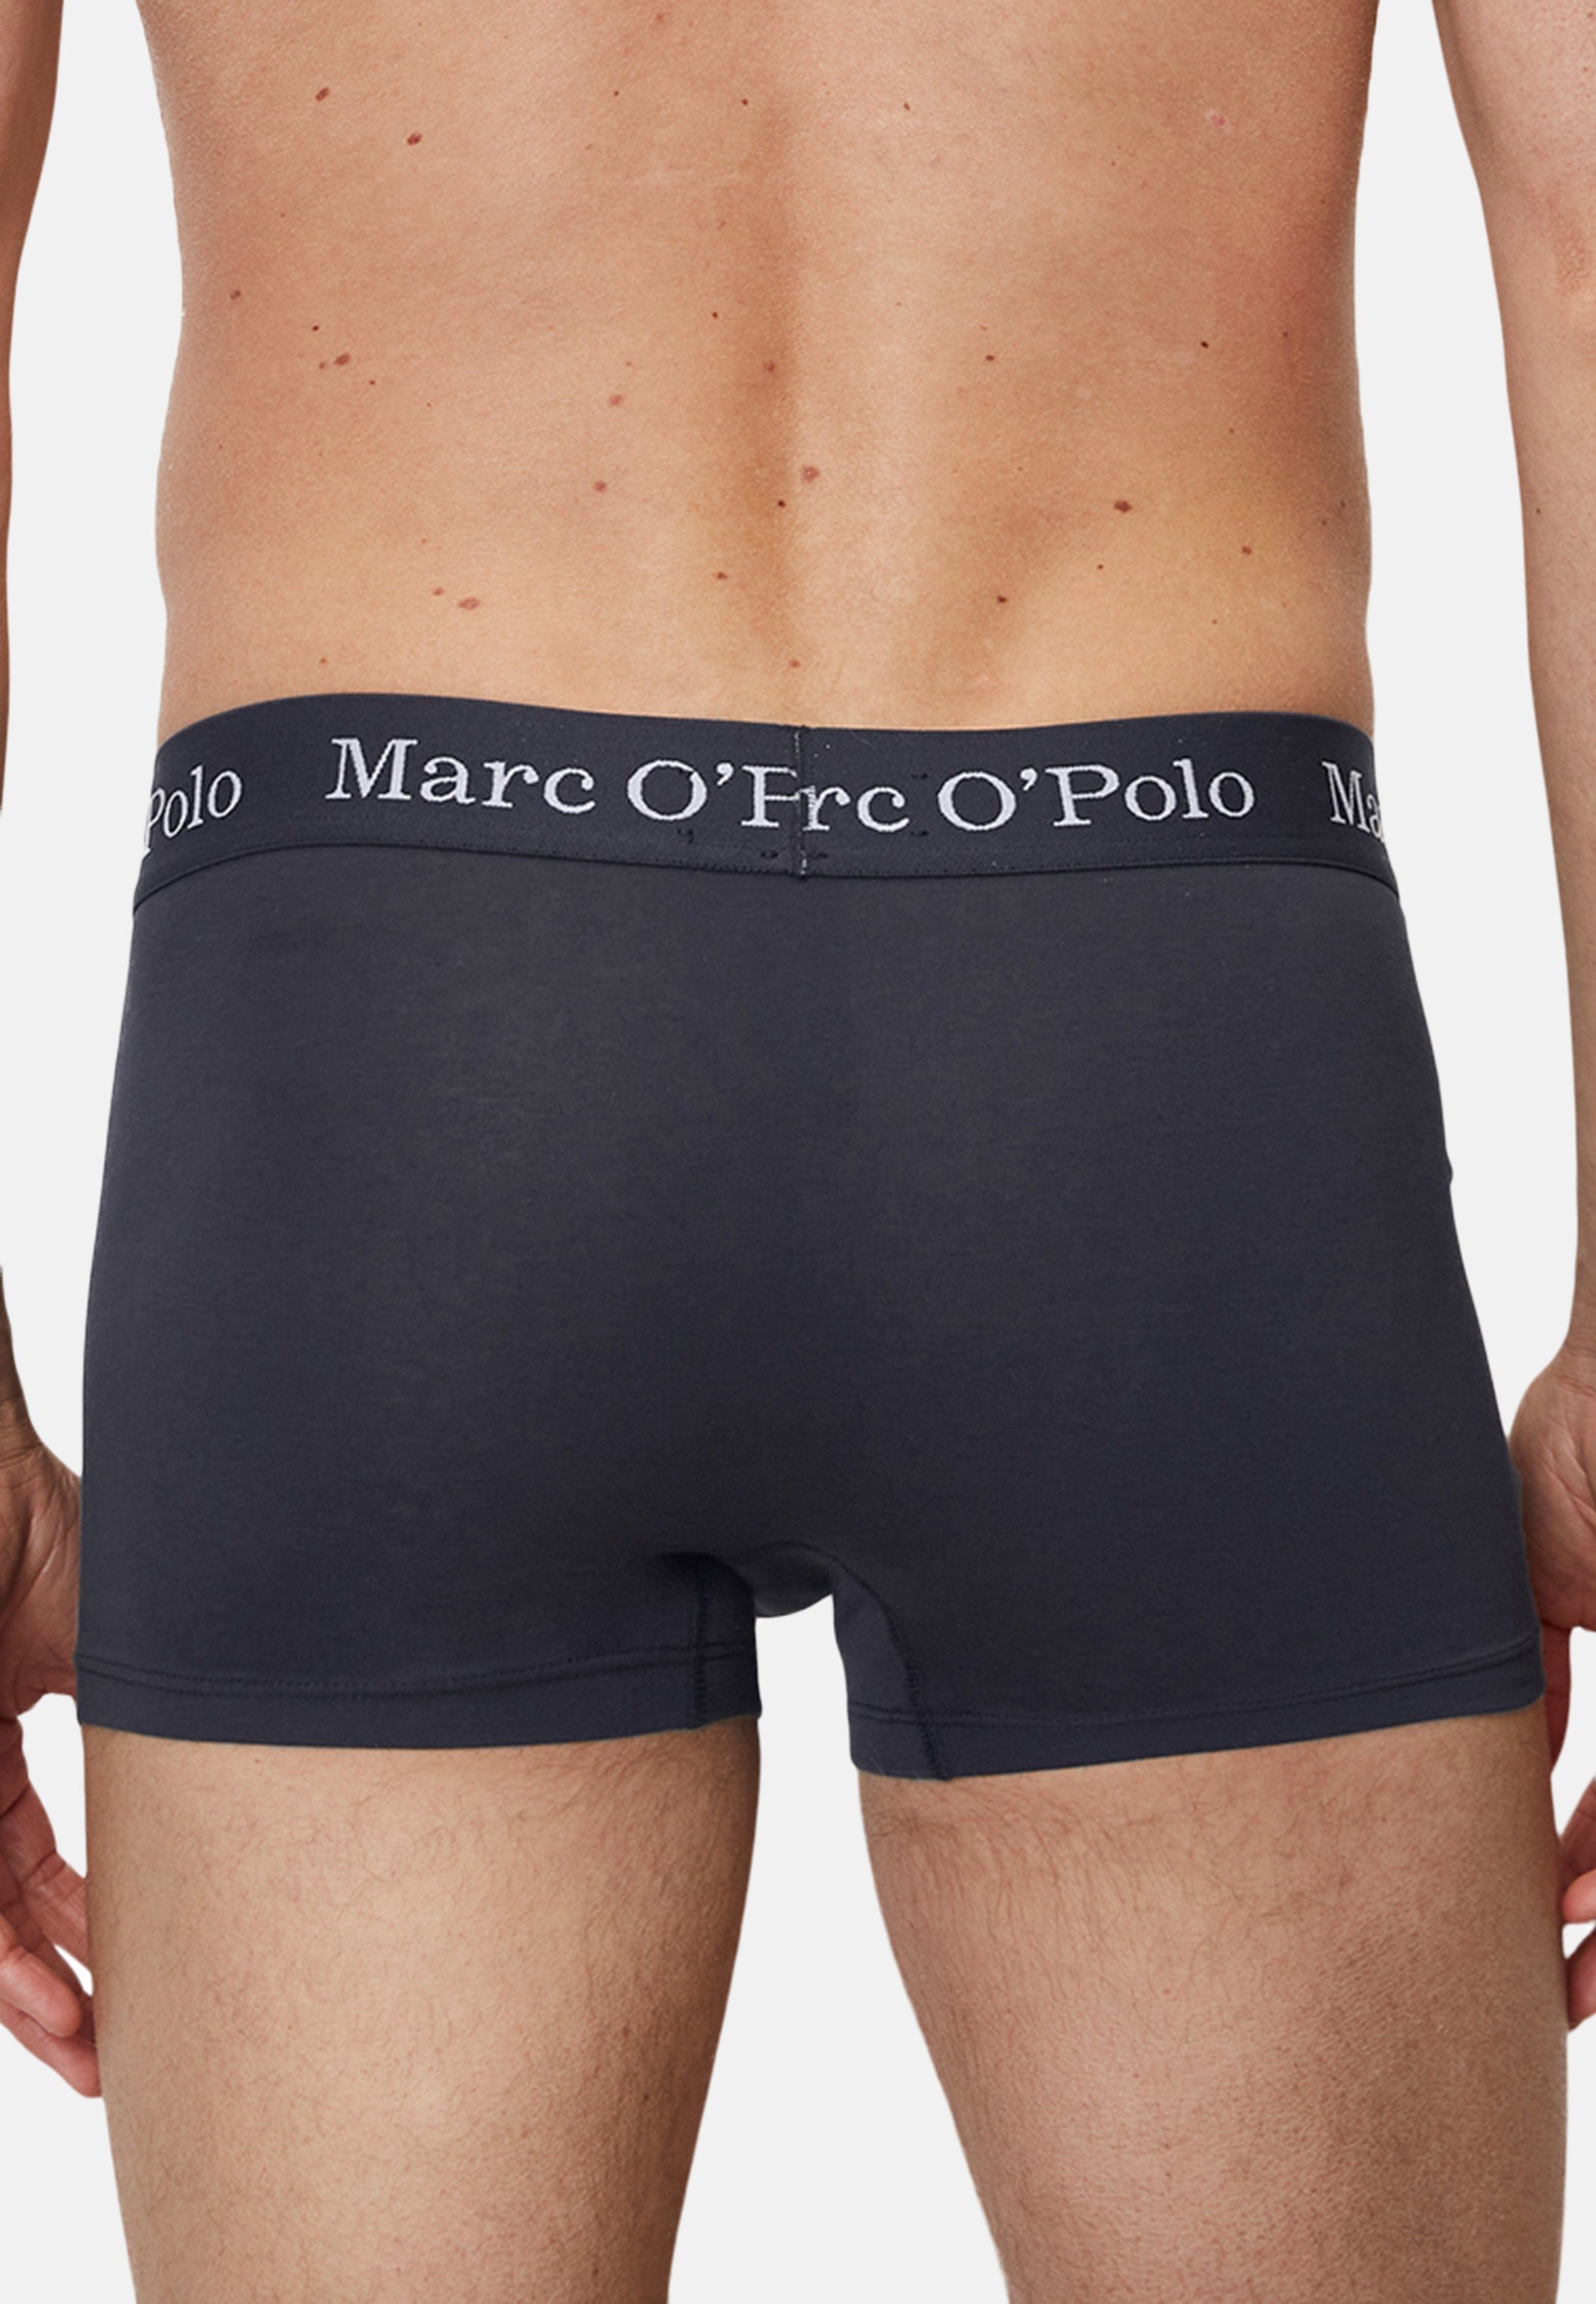 Marc (Spar-Set, Baumwolle 6er Cotton Pack Retro Short Elements / - Boxer Navy - 6-St) Retro Organic - Pant Dark Ohne Eingriff O'Polo